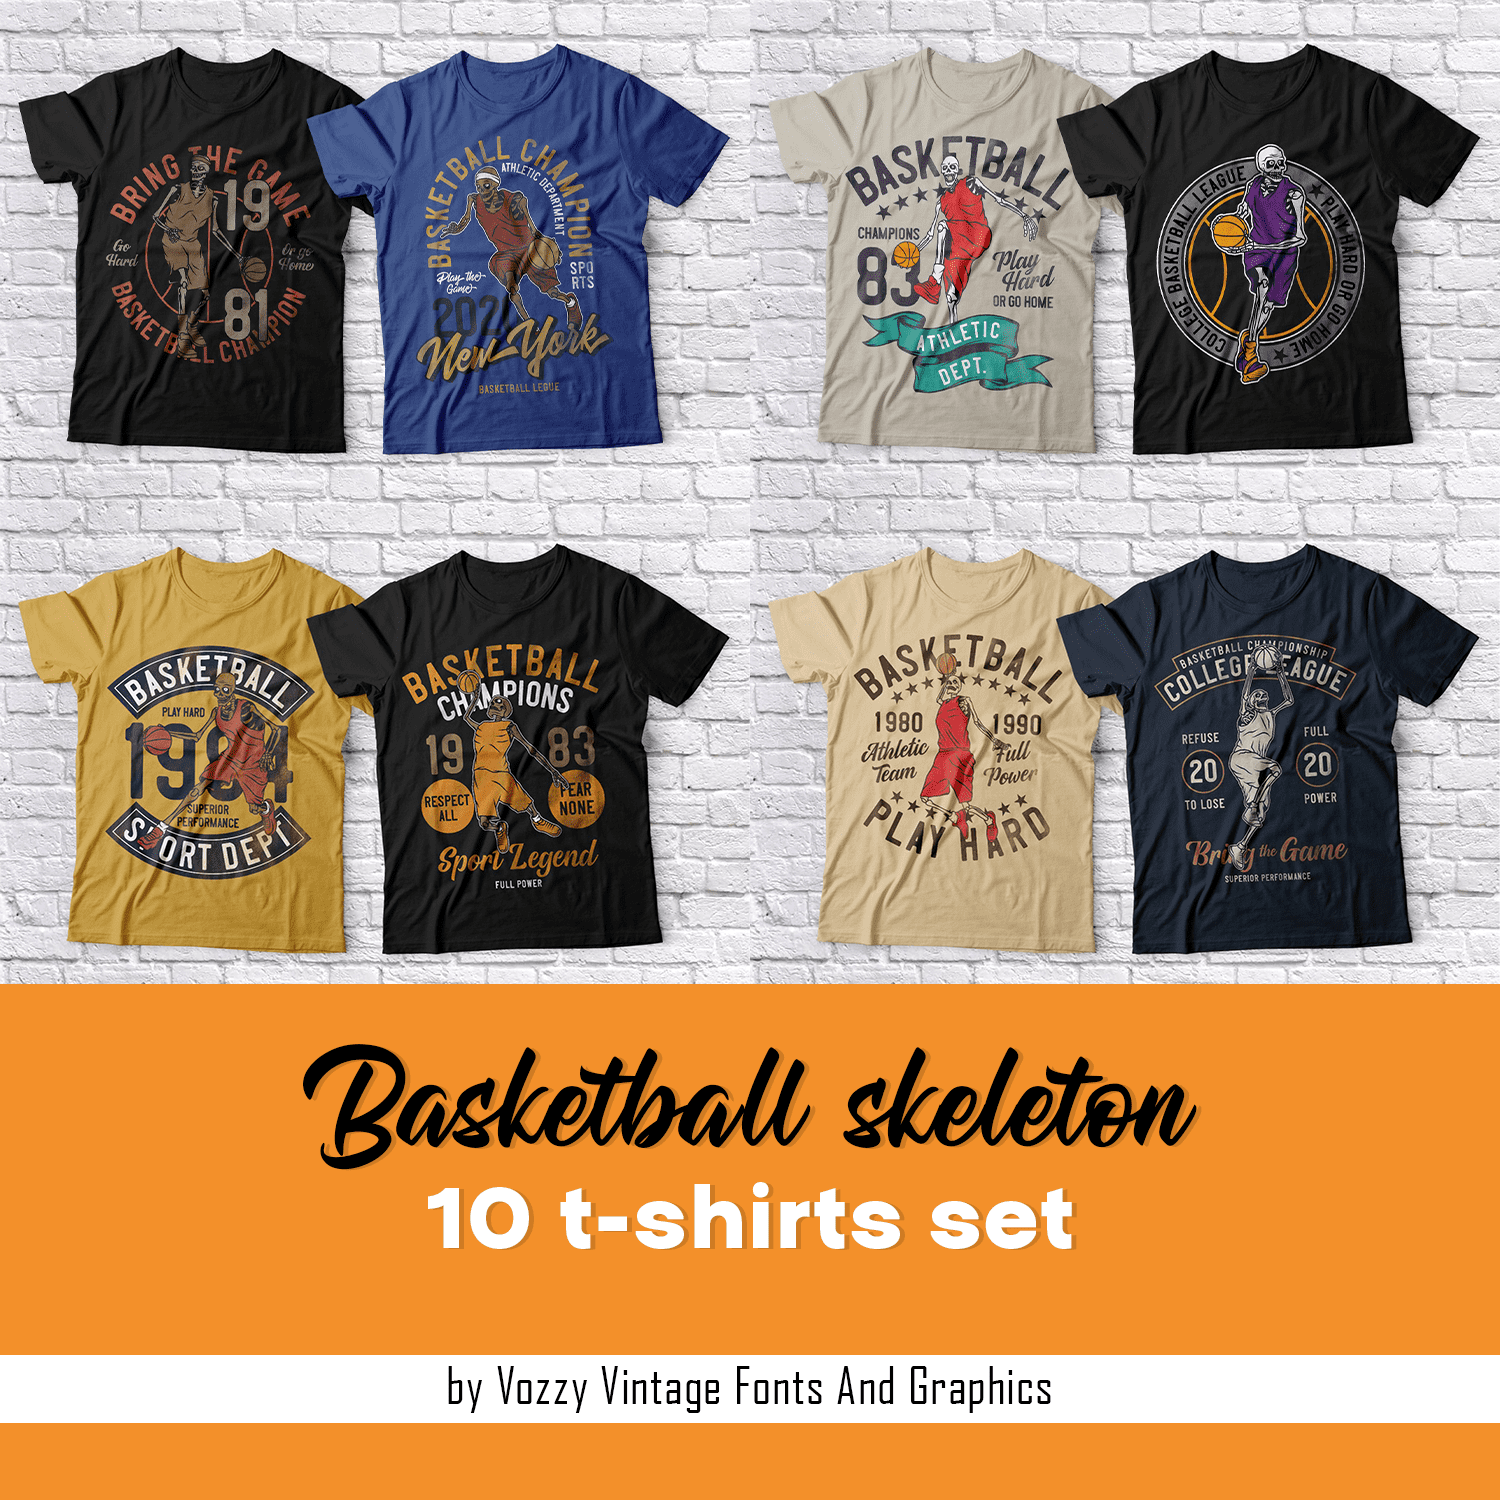 Basketball skeleton 10 t-shirts set cover.